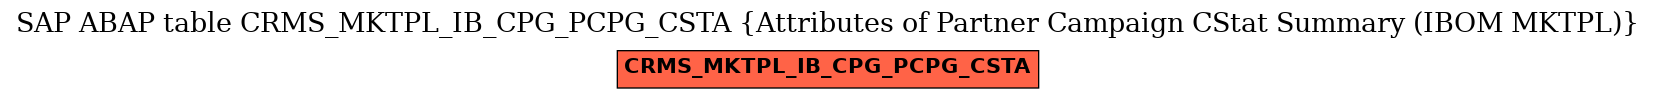 E-R Diagram for table CRMS_MKTPL_IB_CPG_PCPG_CSTA (Attributes of Partner Campaign CStat Summary (IBOM MKTPL))